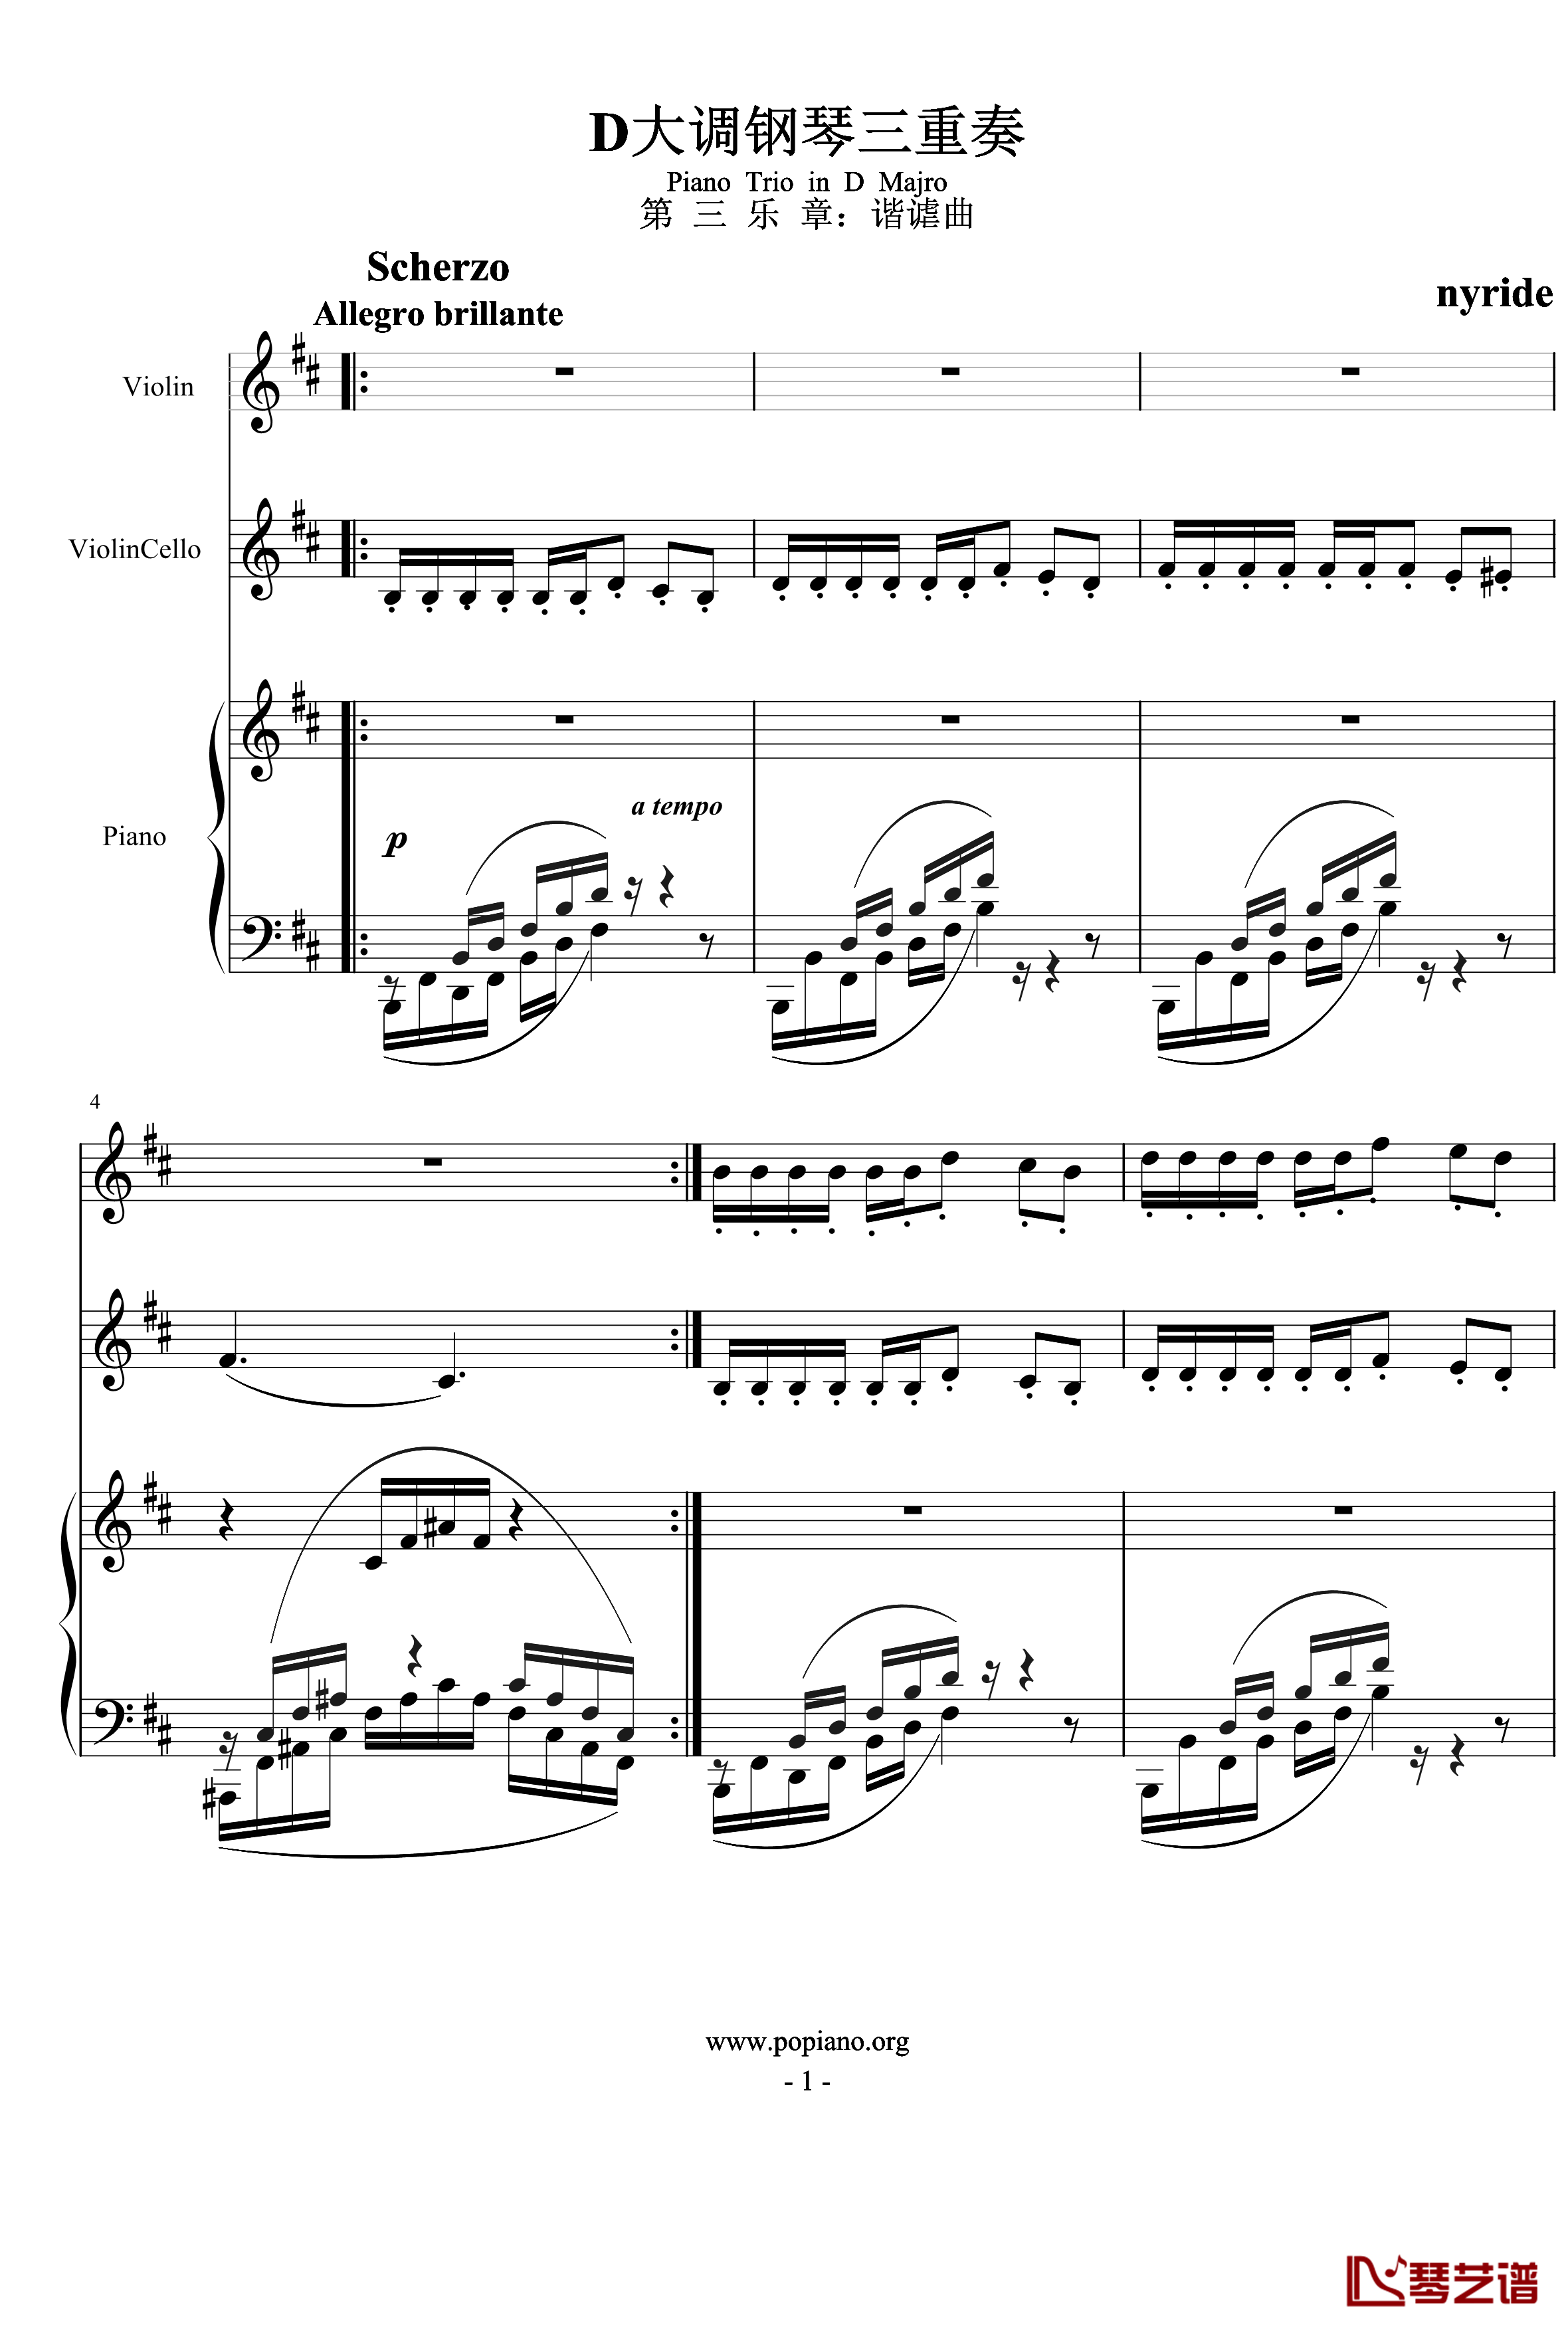 D大调钢琴三重奏第3乐章钢琴谱-nyride1